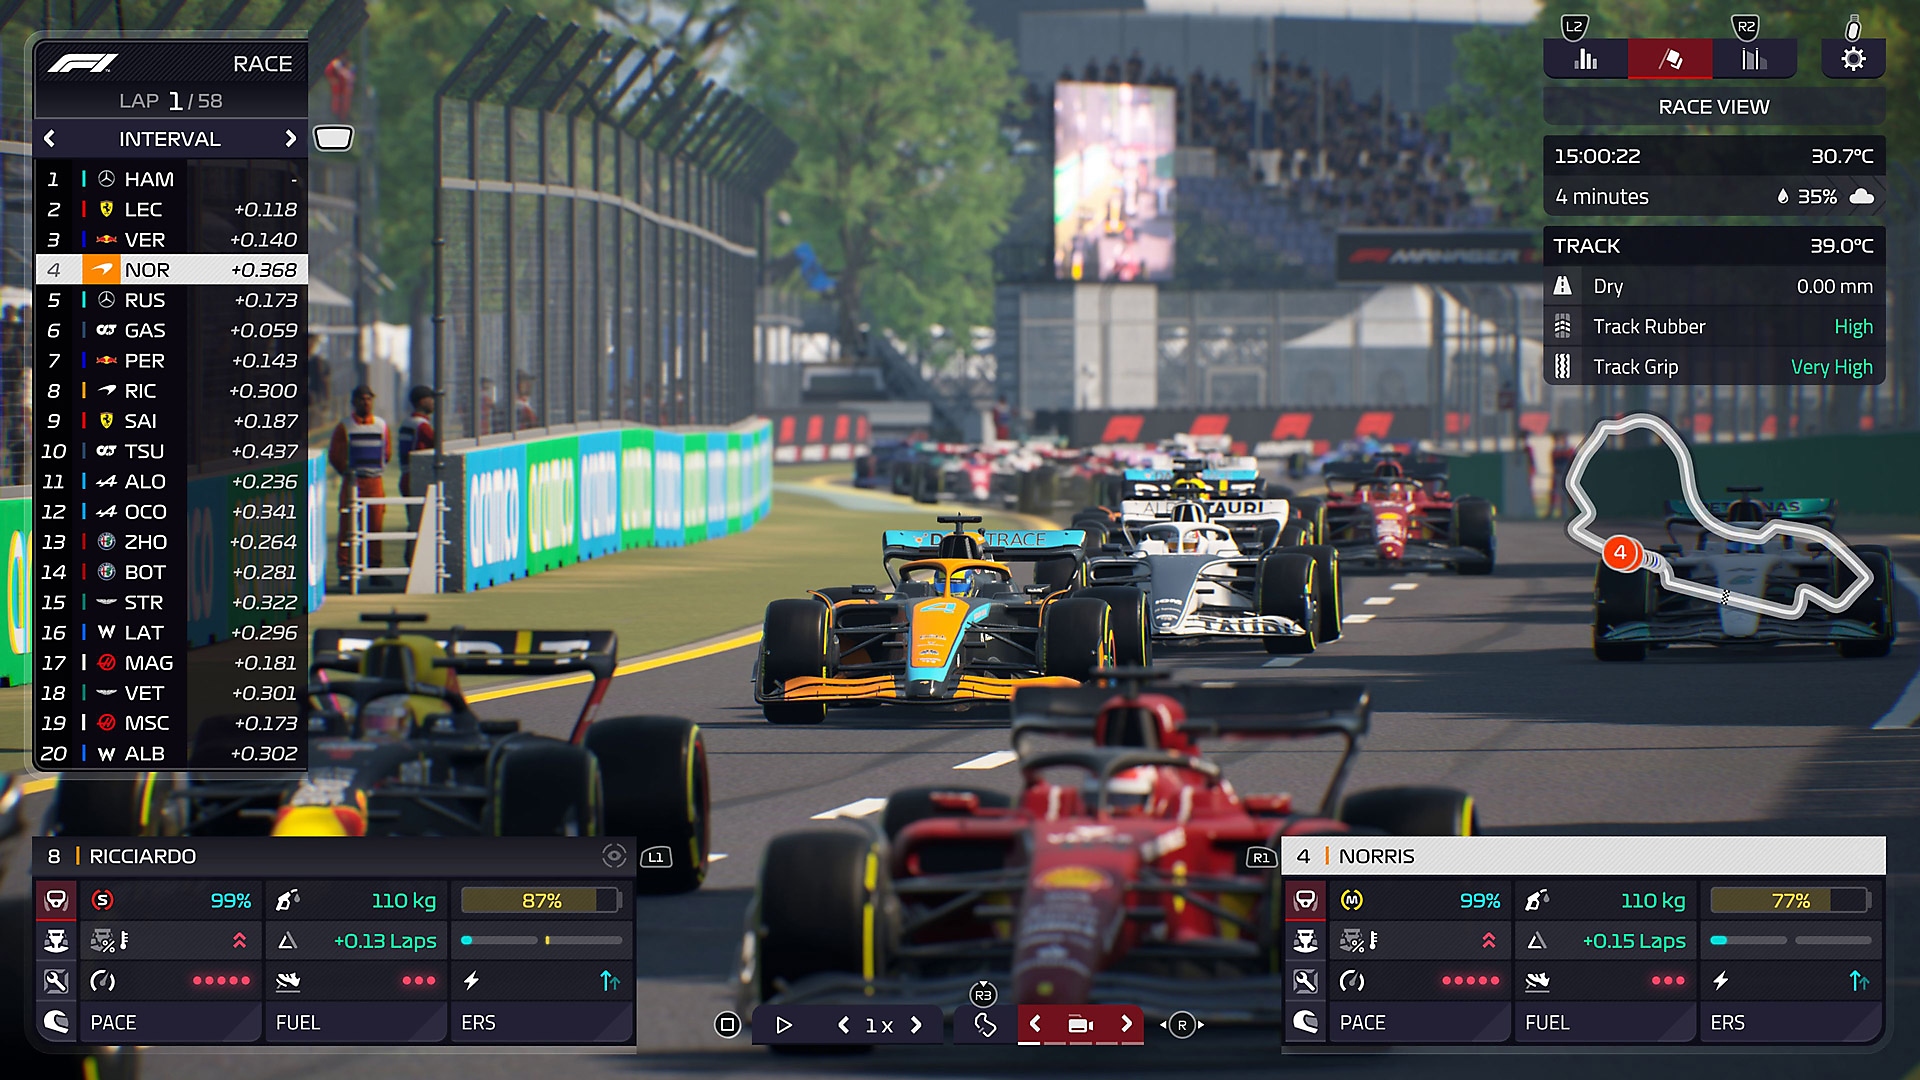 F1 manager 2022 screenshot pf race in progress